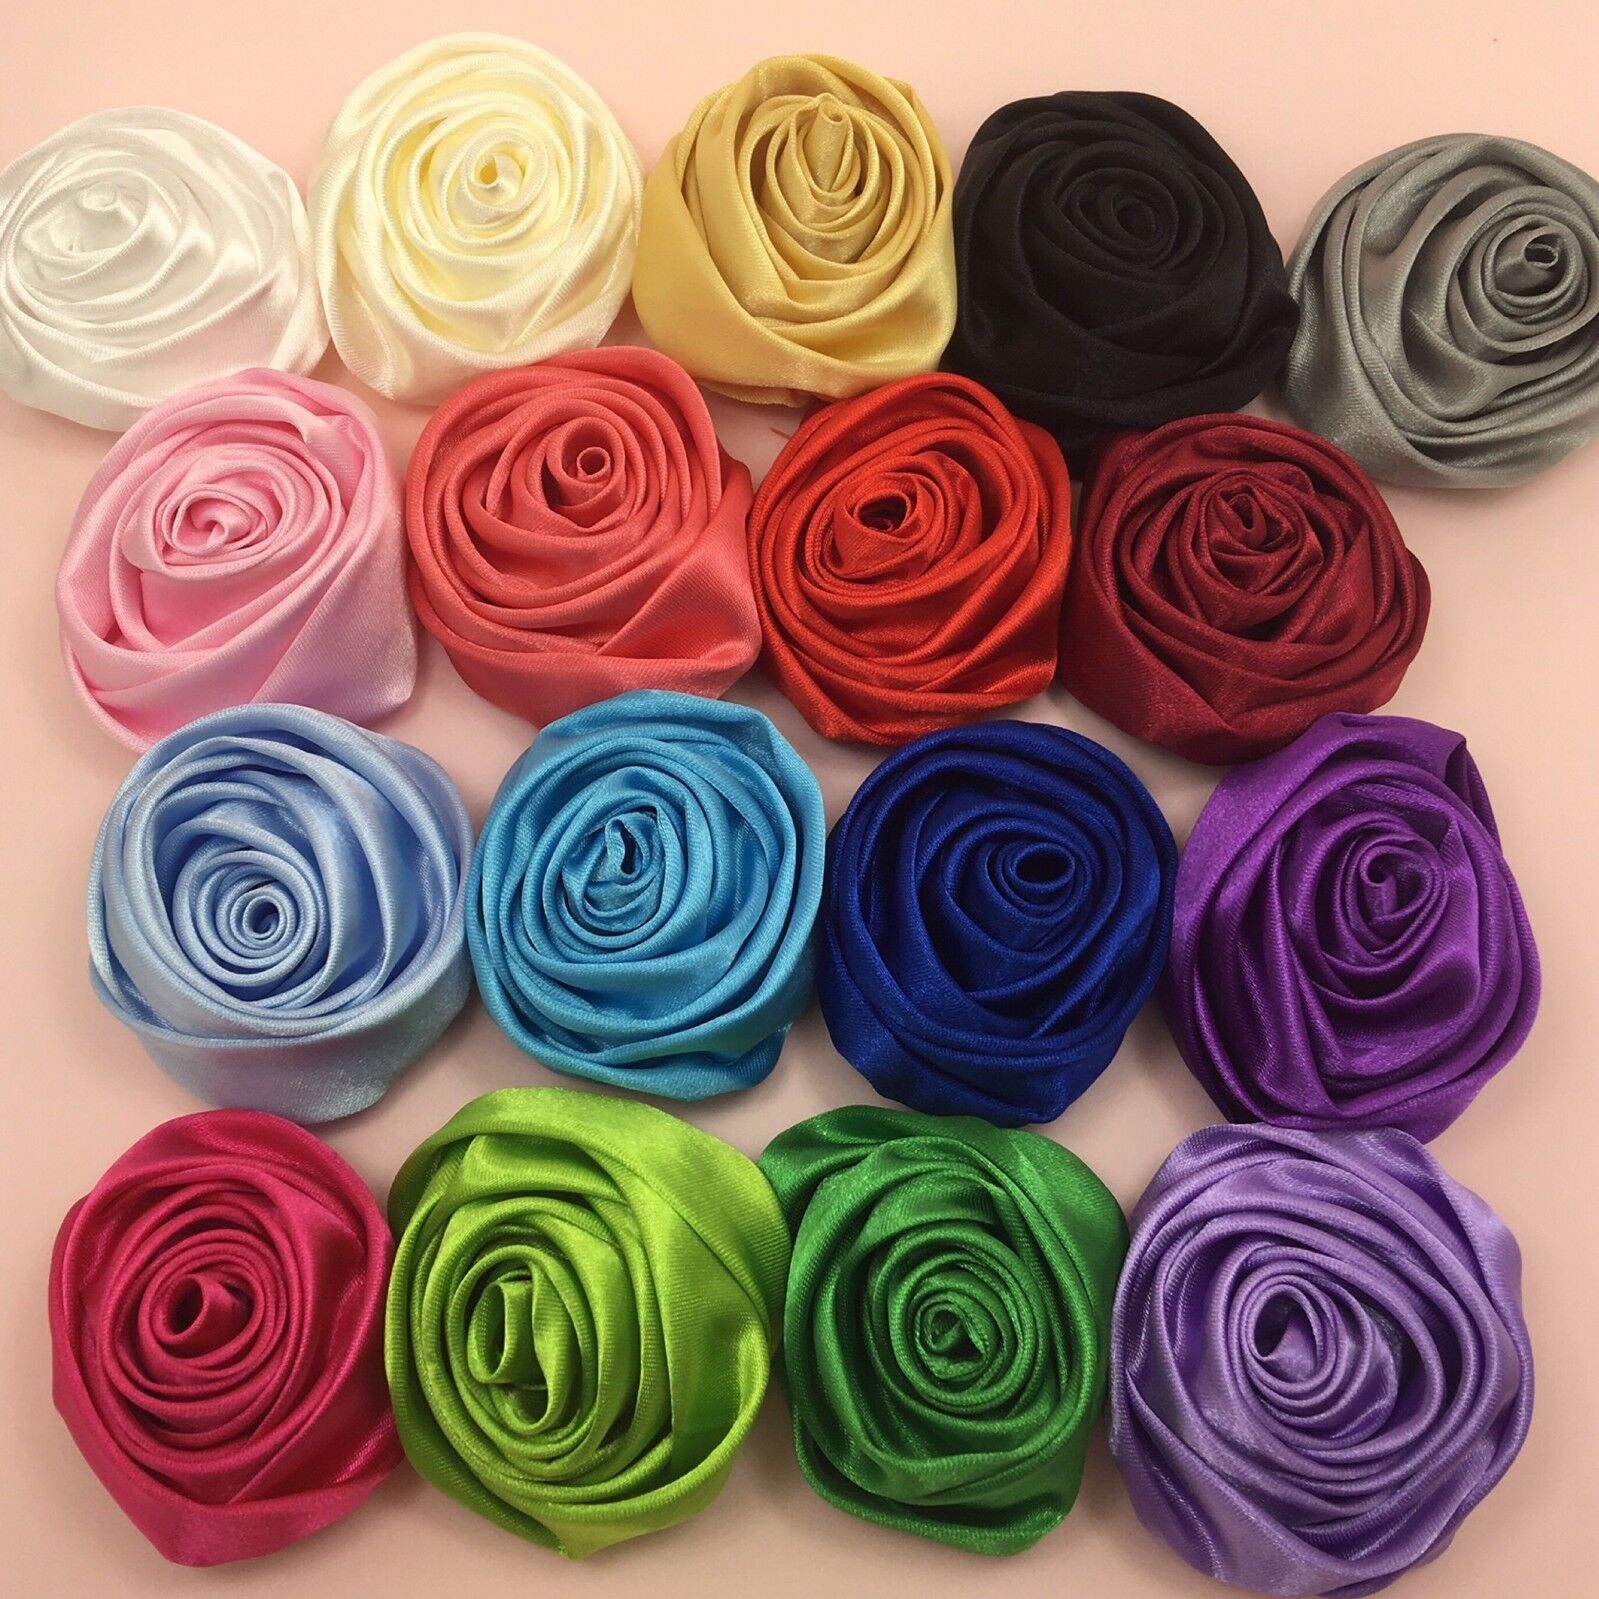 Dandan DIY Upick More Than 26 Colors 40pcs Satin Ribbon Flowers Bows Rose w/ RHI